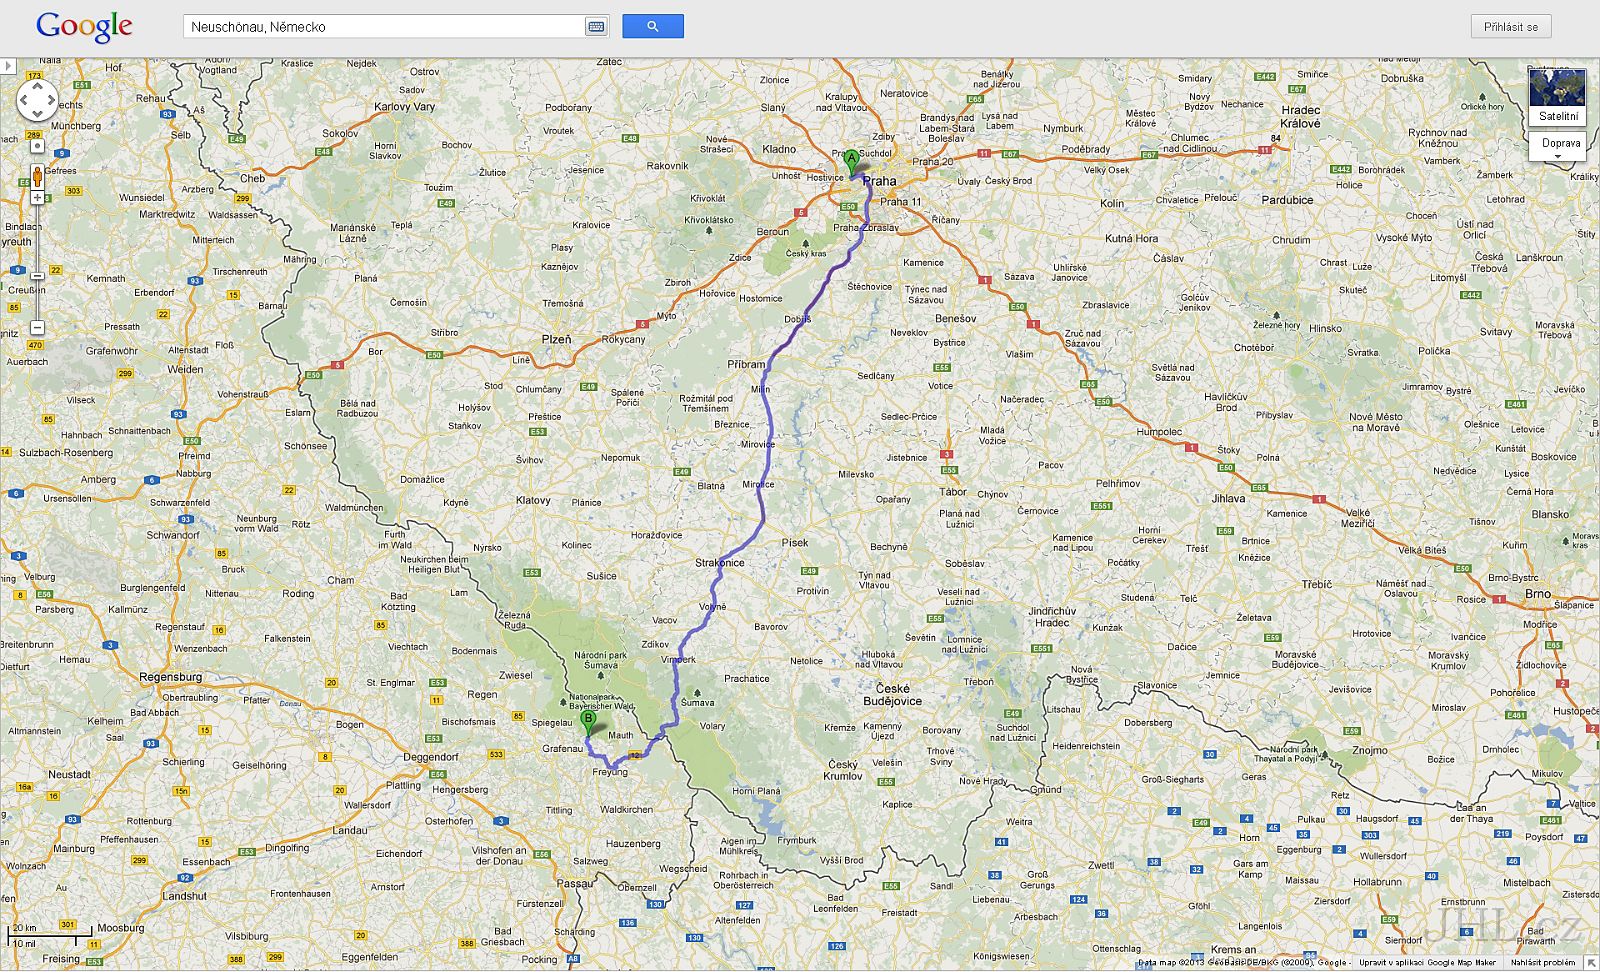 01_Neuschoenau_trasa.jpg - Trasa: Praha - Neuschönau (197 km, 2 hod. 45 min.) / Route: Prague - Neuschönau (197 km, 2 hours 45 minutes)